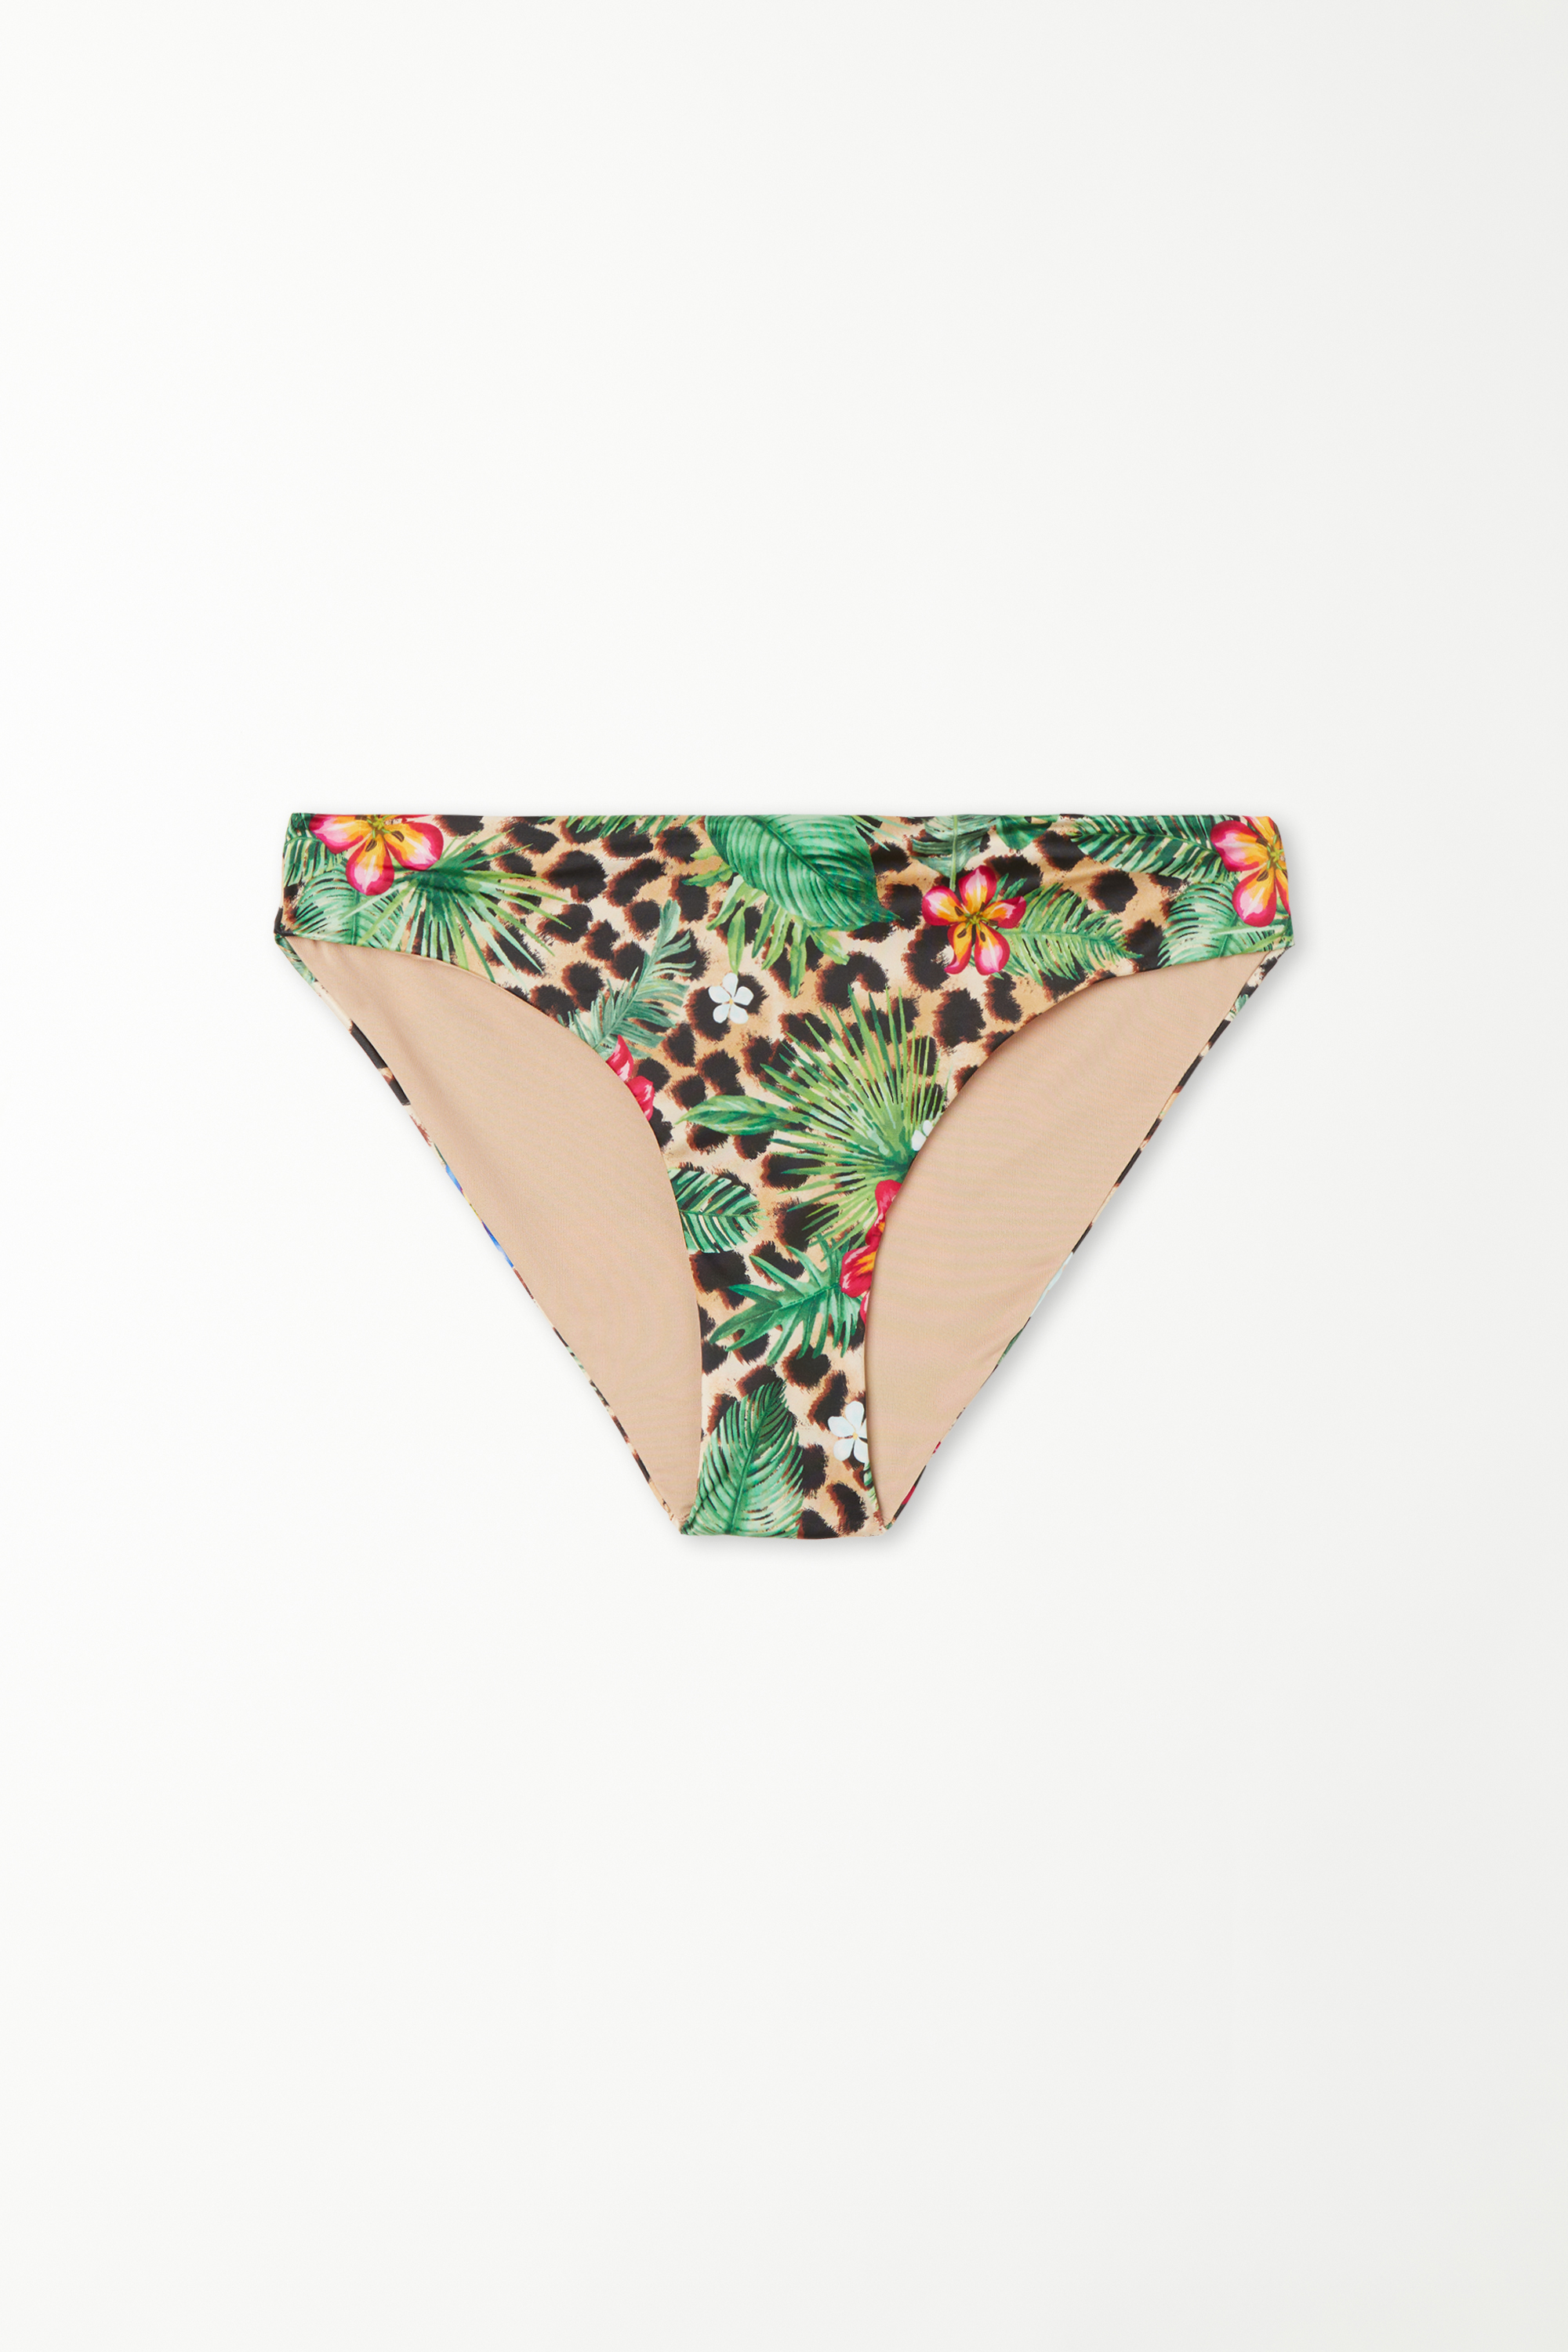 Panty de Bikini Clásico Wild Blossom